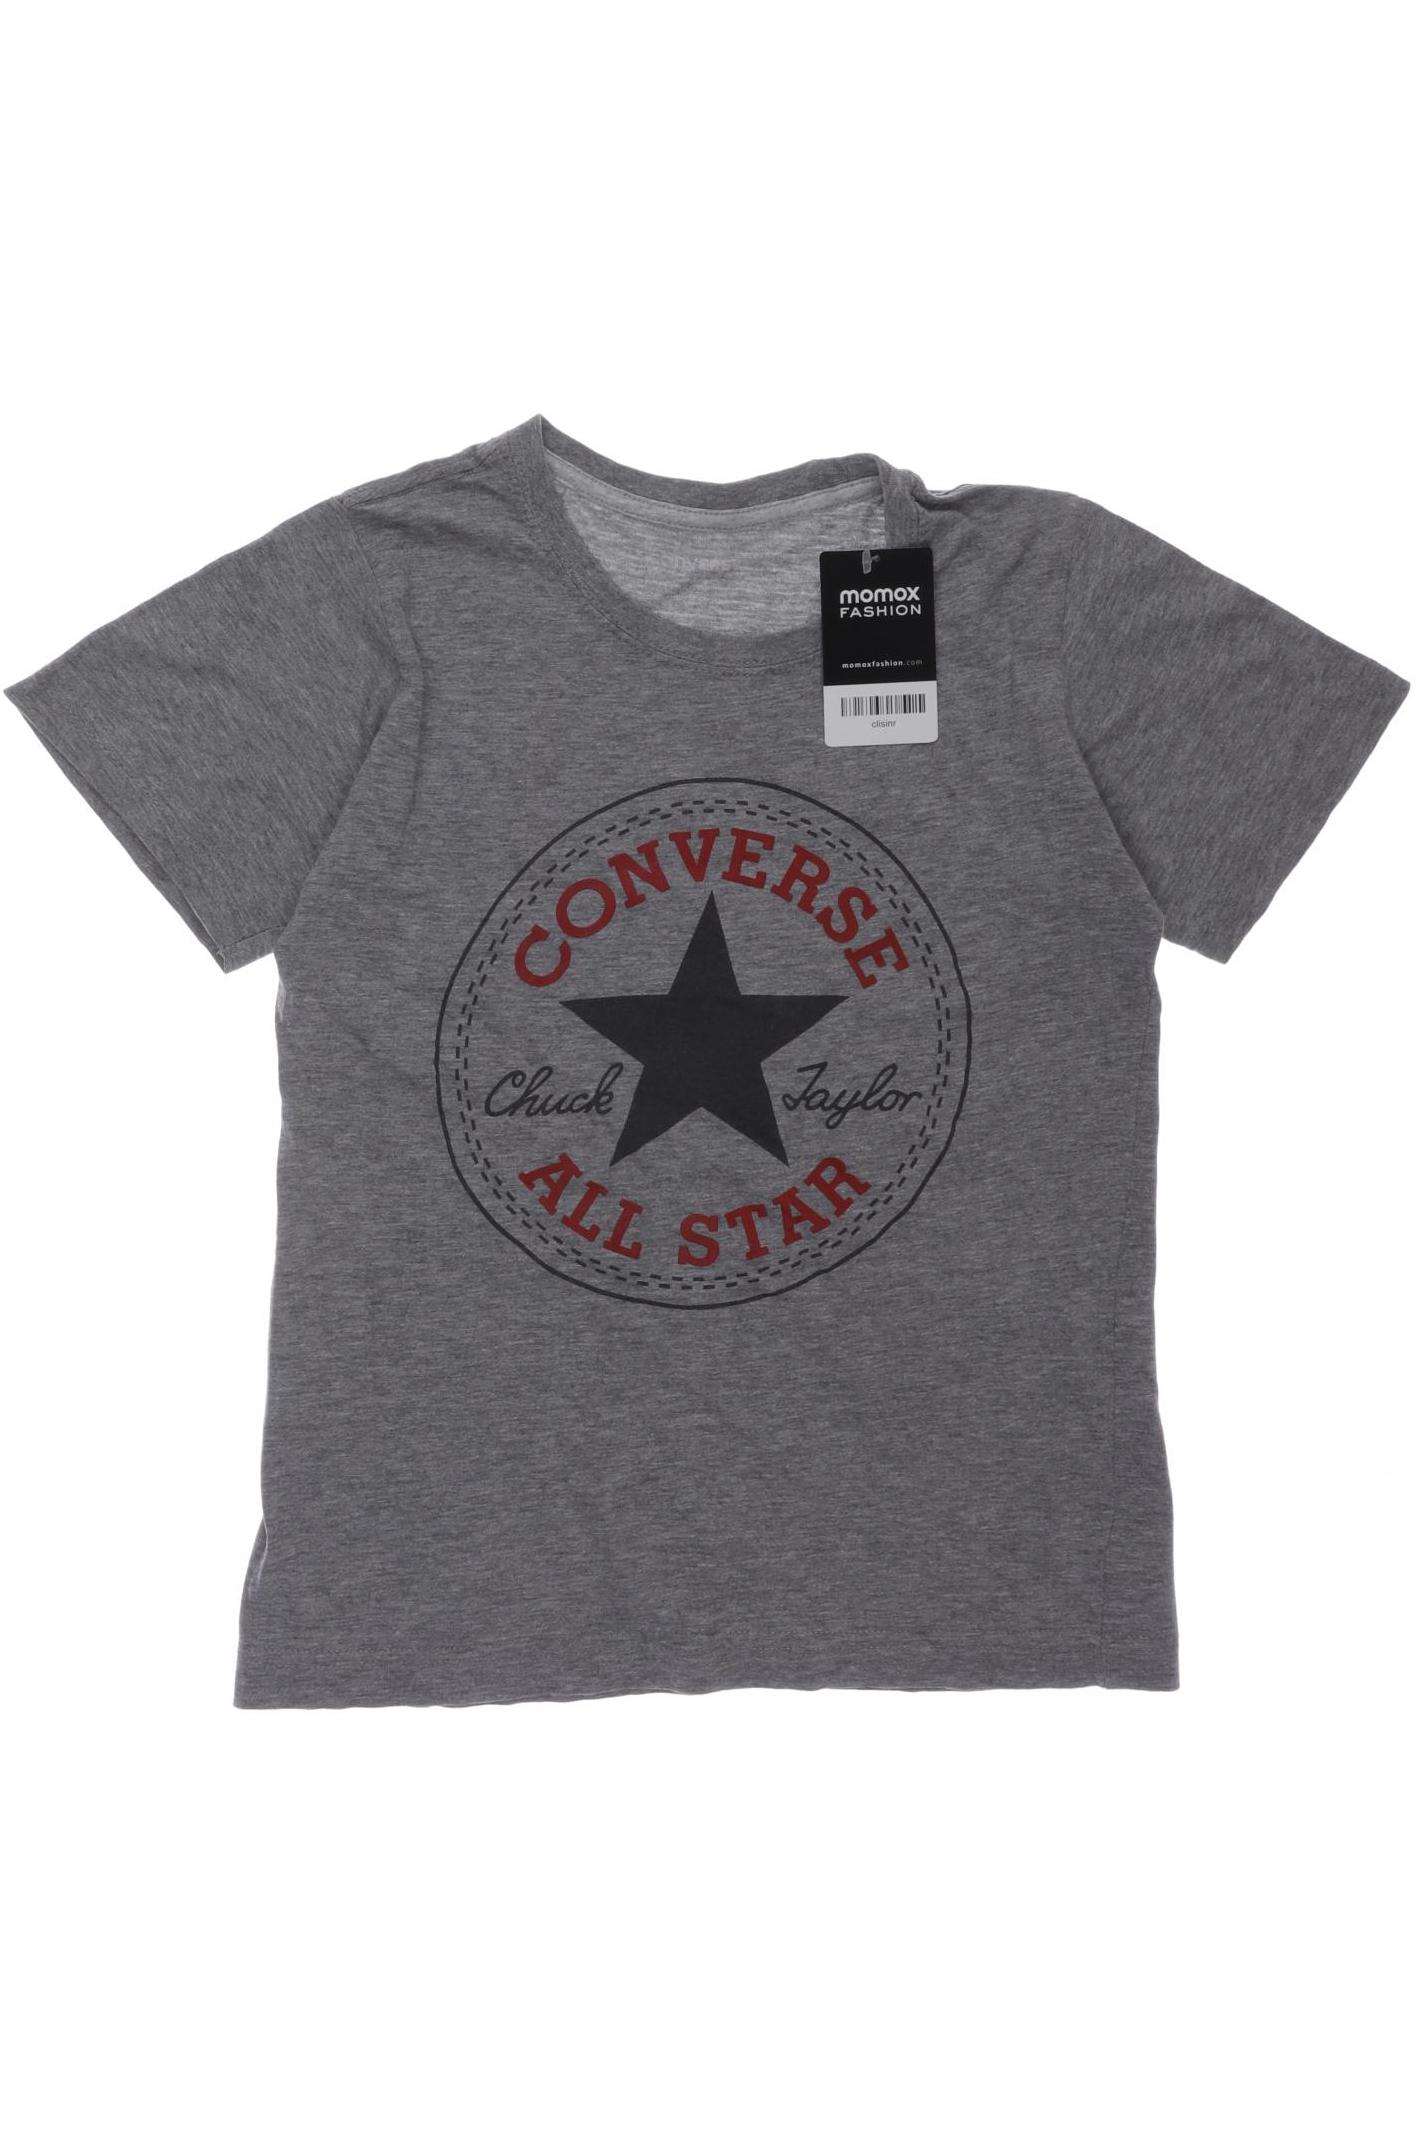 Converse Jungen T-Shirt, grau von Converse